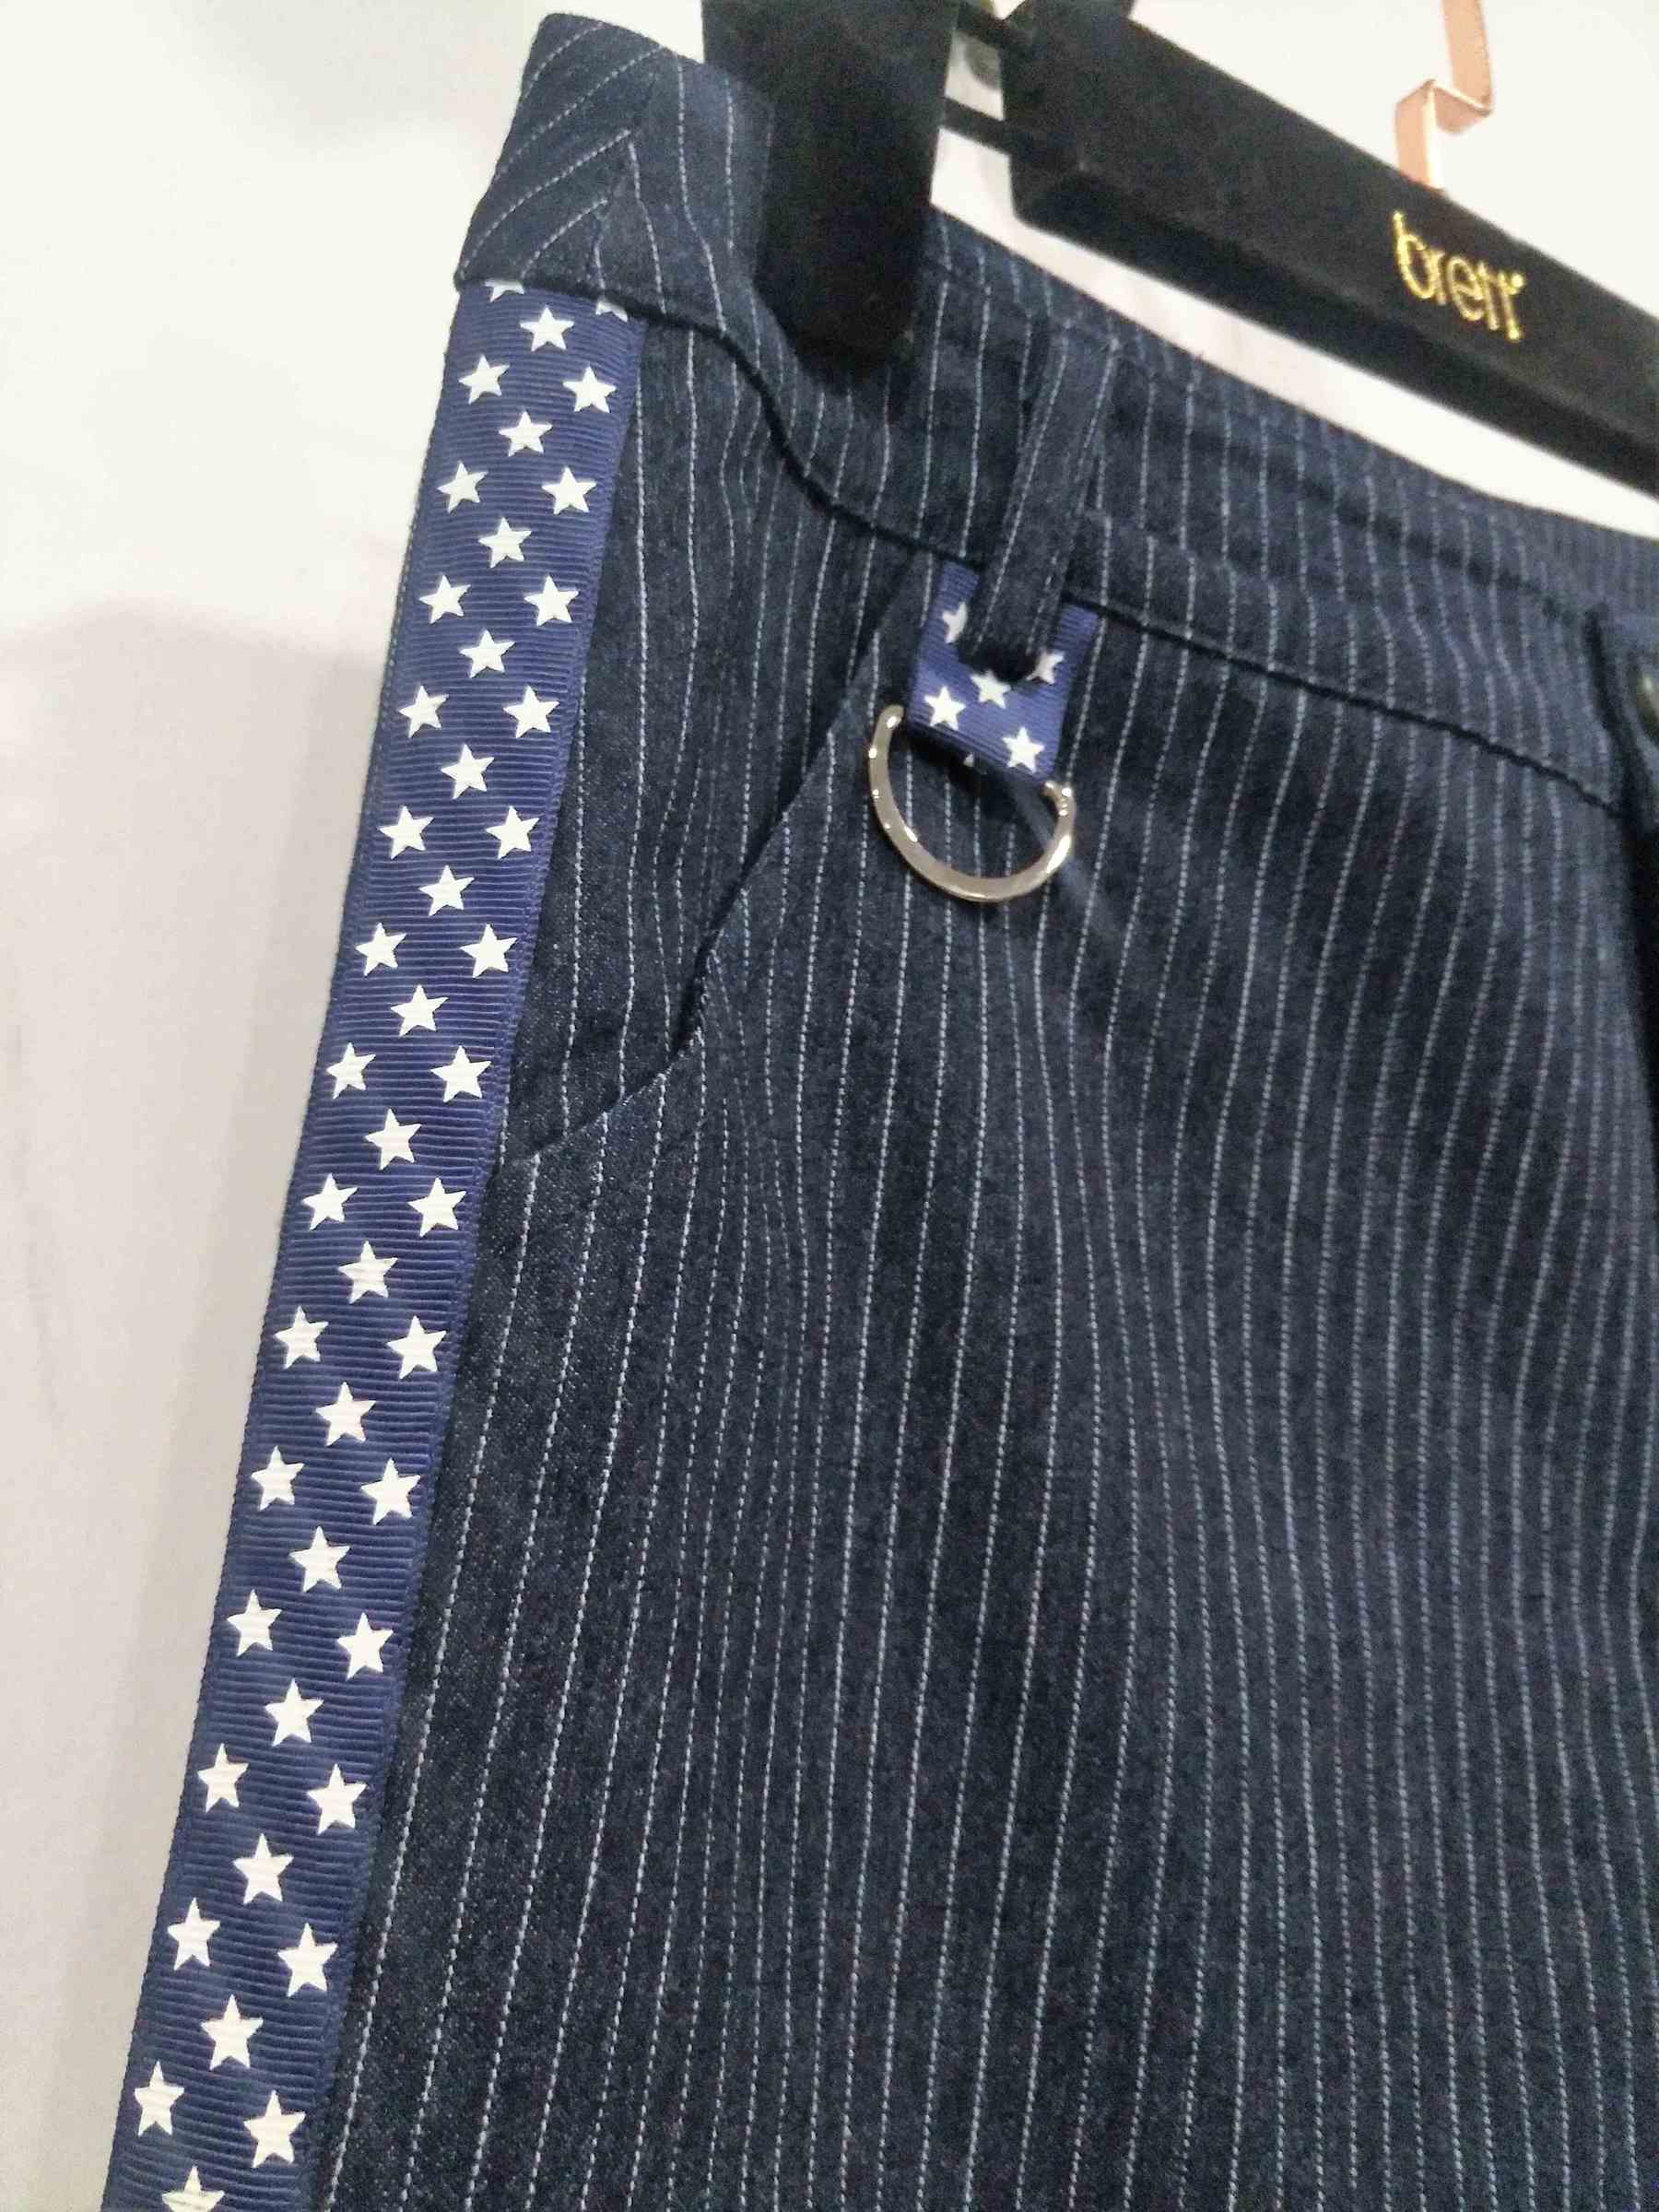 White star hem pattern shorts with striped shorts in navy ladies fashion for mini shorts (6).jpg